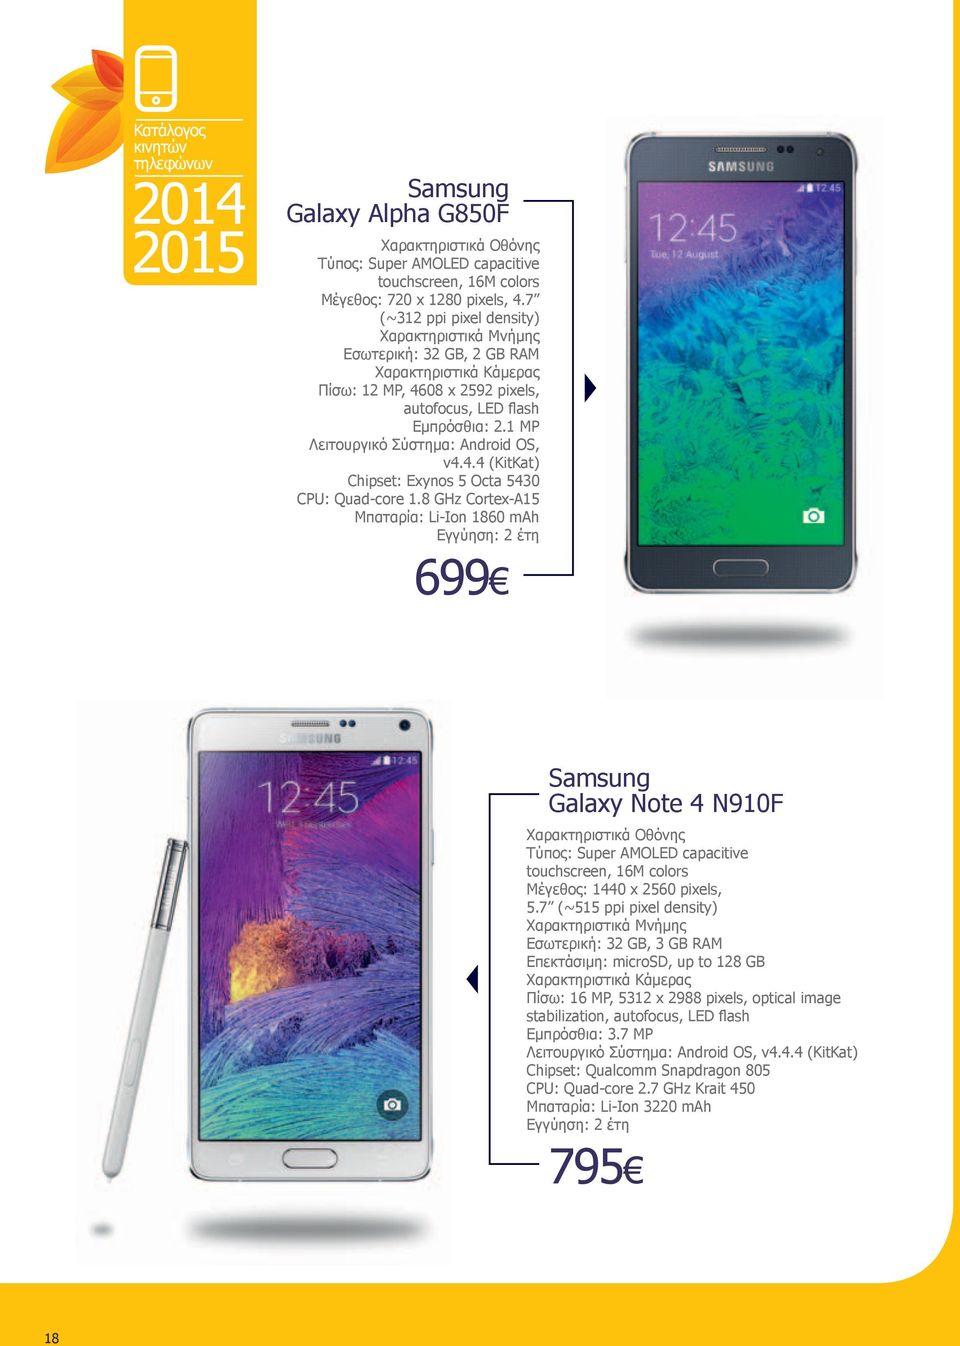 8 GHz Cortex-A15 Μπαταρία: Li-Ion 1860 mah 699 Samsung Galaxy Note 4 N910F Τύπος: Super AMOLED capacitive touchscreen, 16M colors Μέγεθος: 1440 x 2560 pixels, 5.